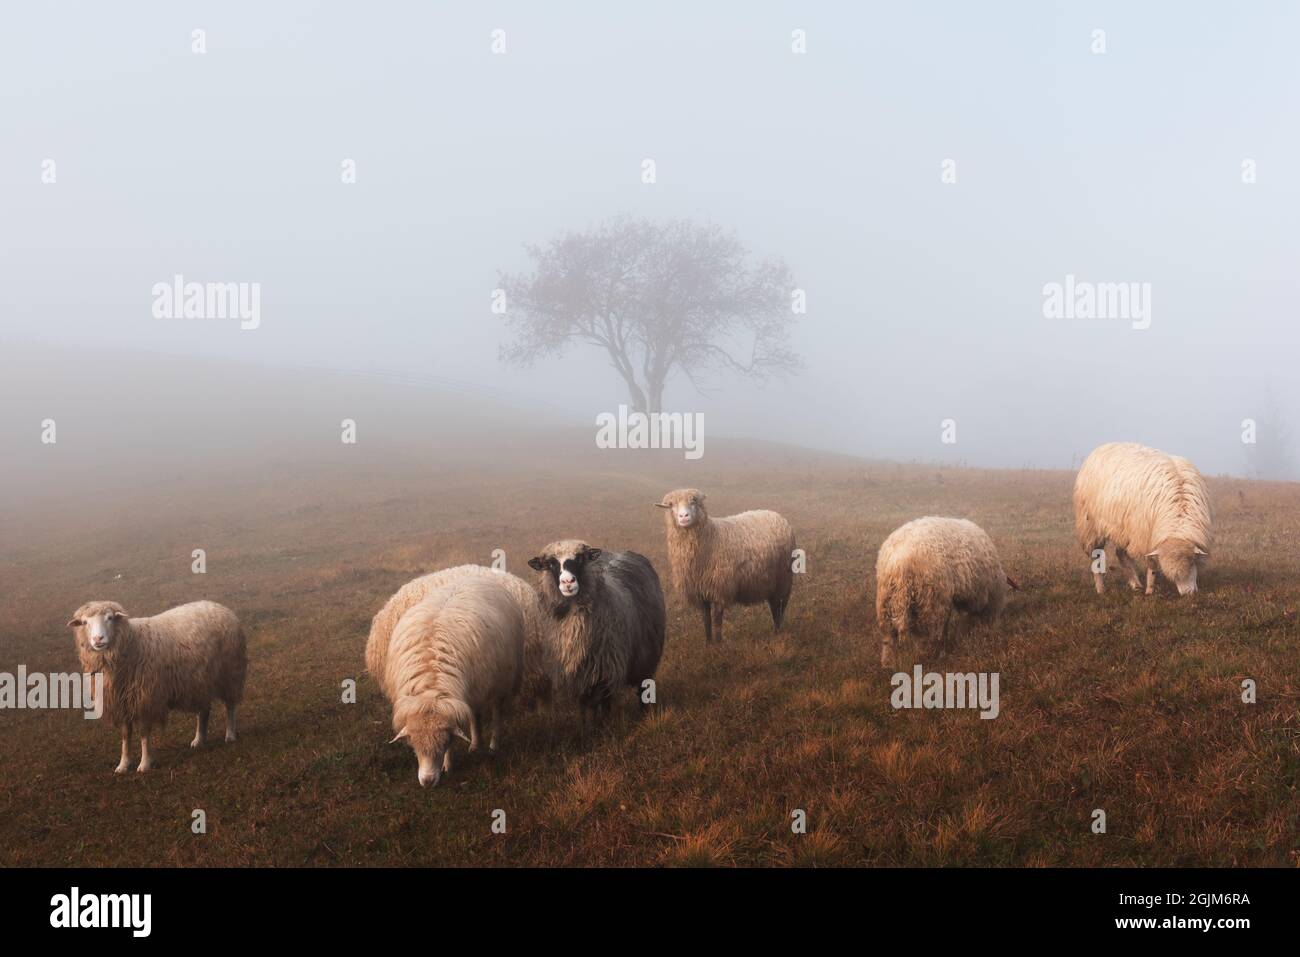 Herd of sheeps in foggy autumn mountains. Carpathians, Ukraine, Europe. Landscape photography Stock Photo